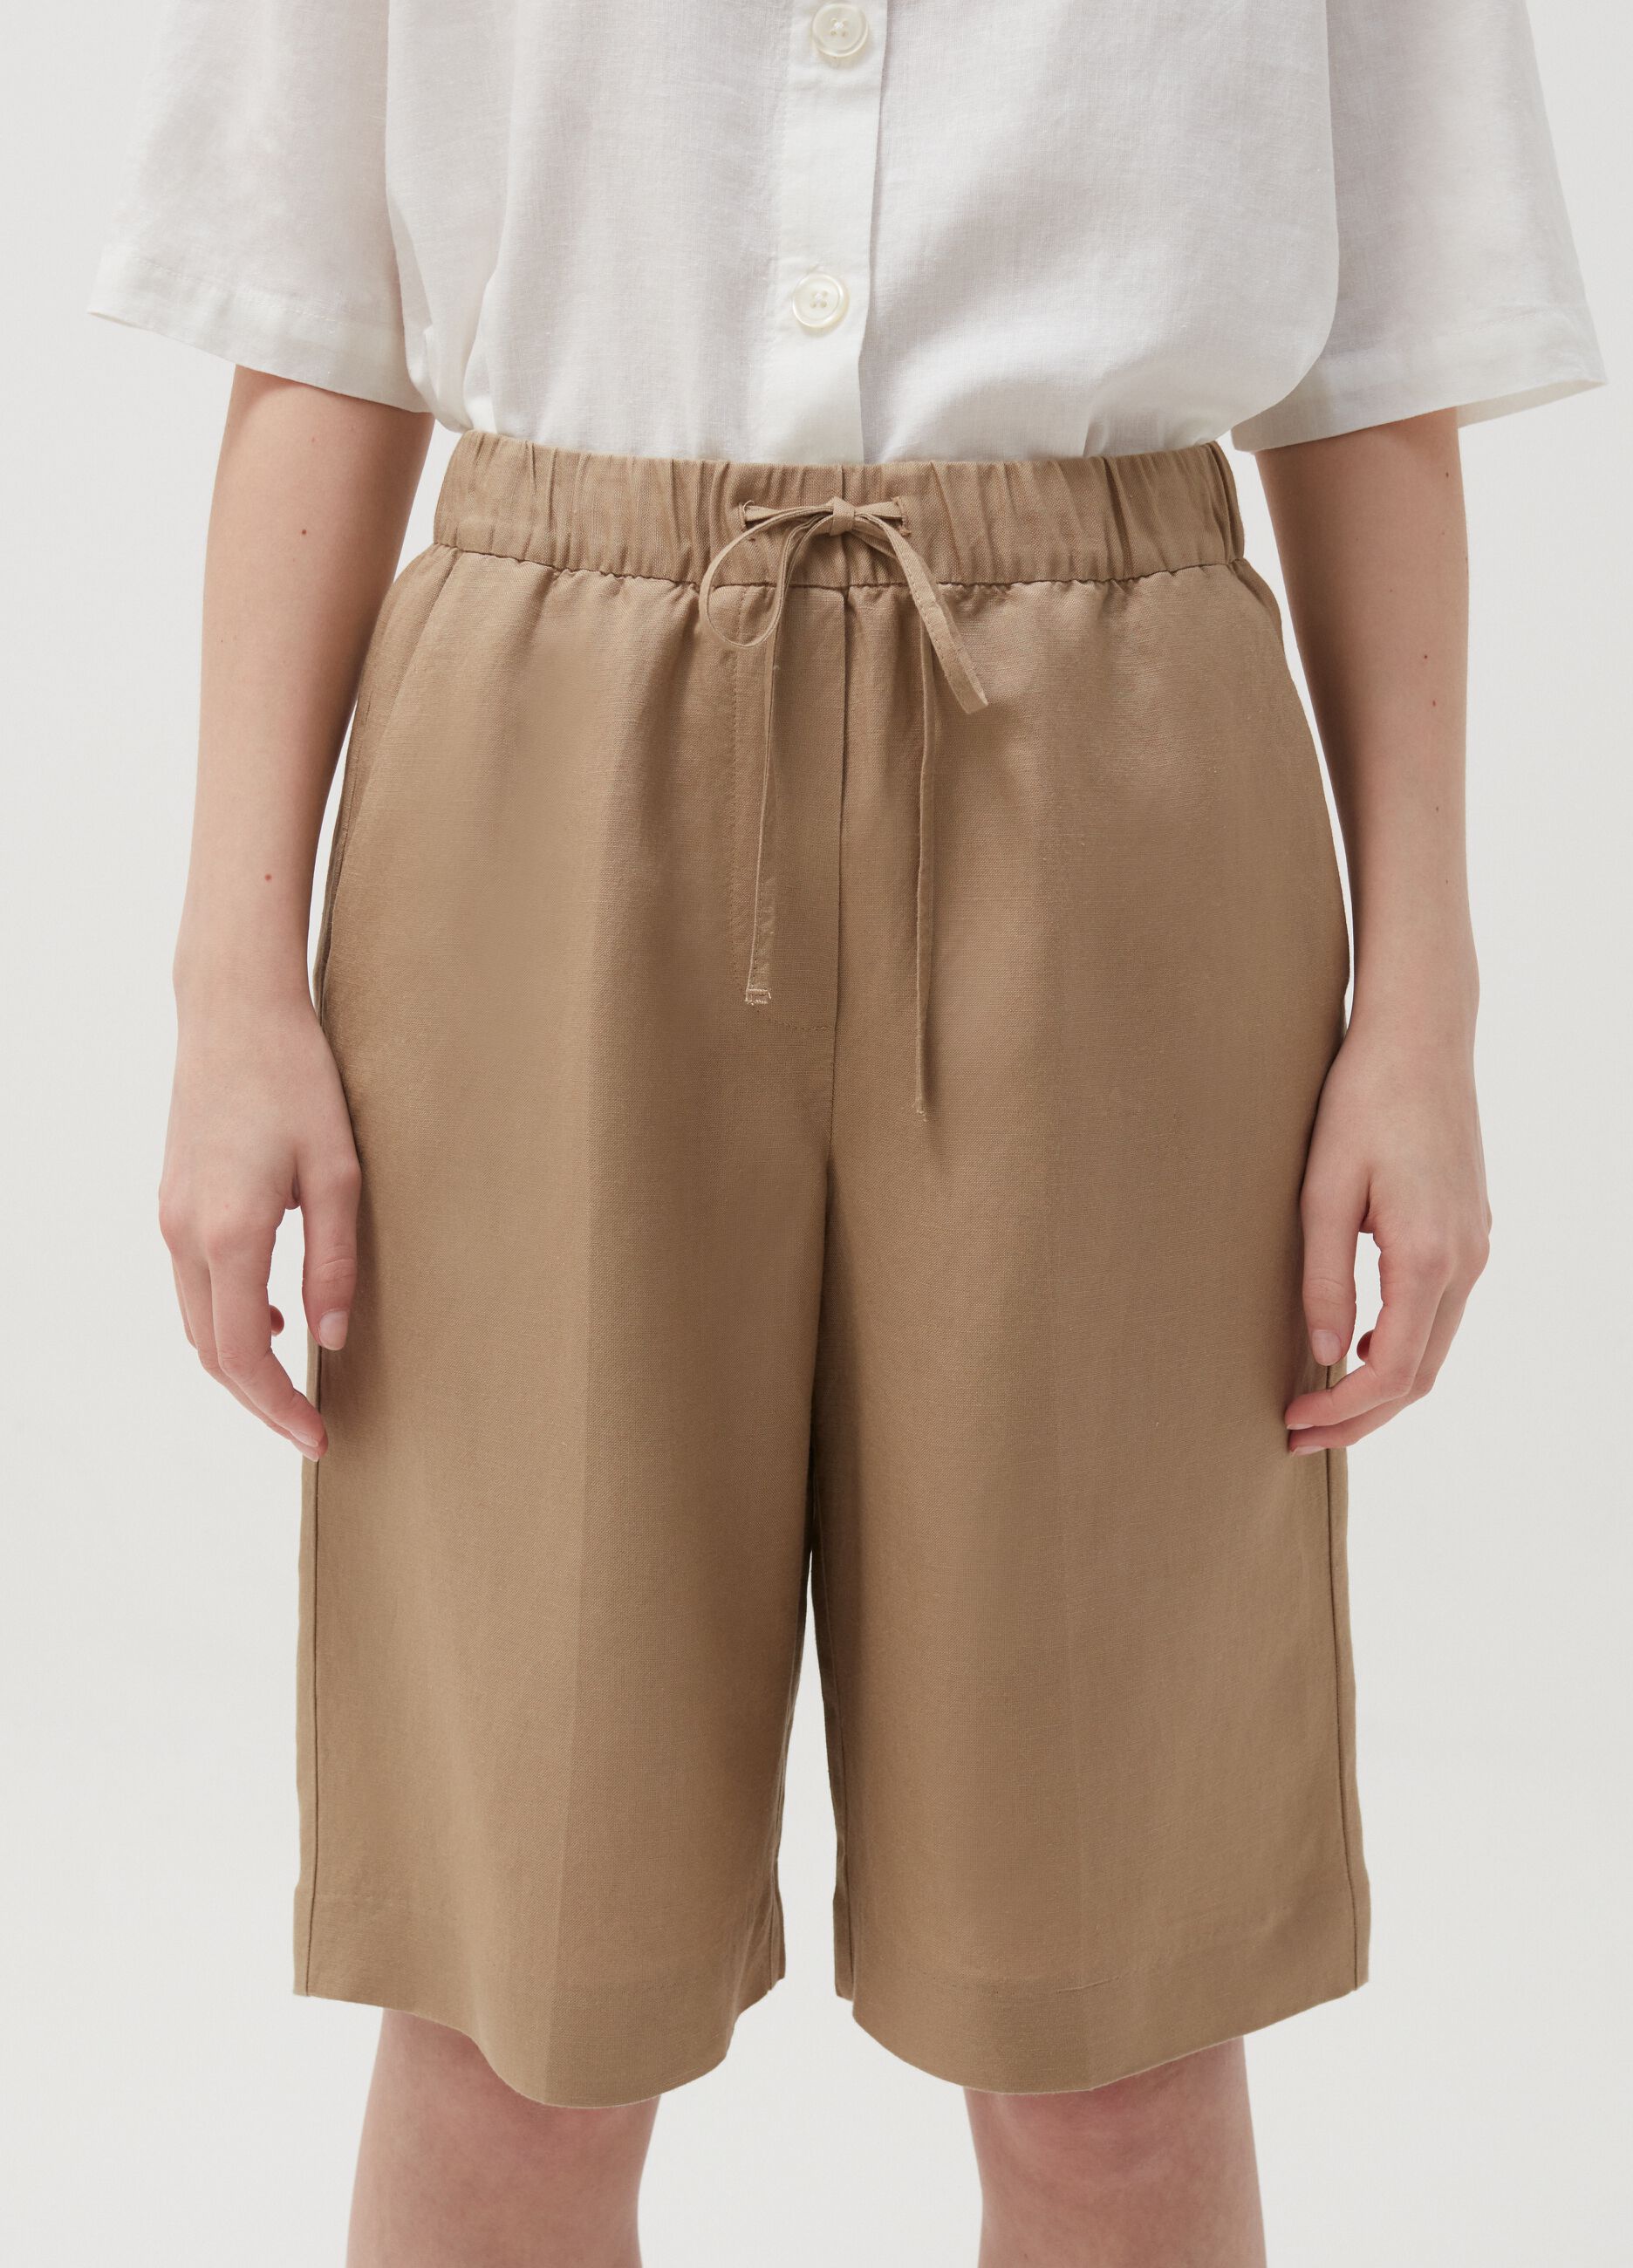 Bermuda shorts in linen and viscose